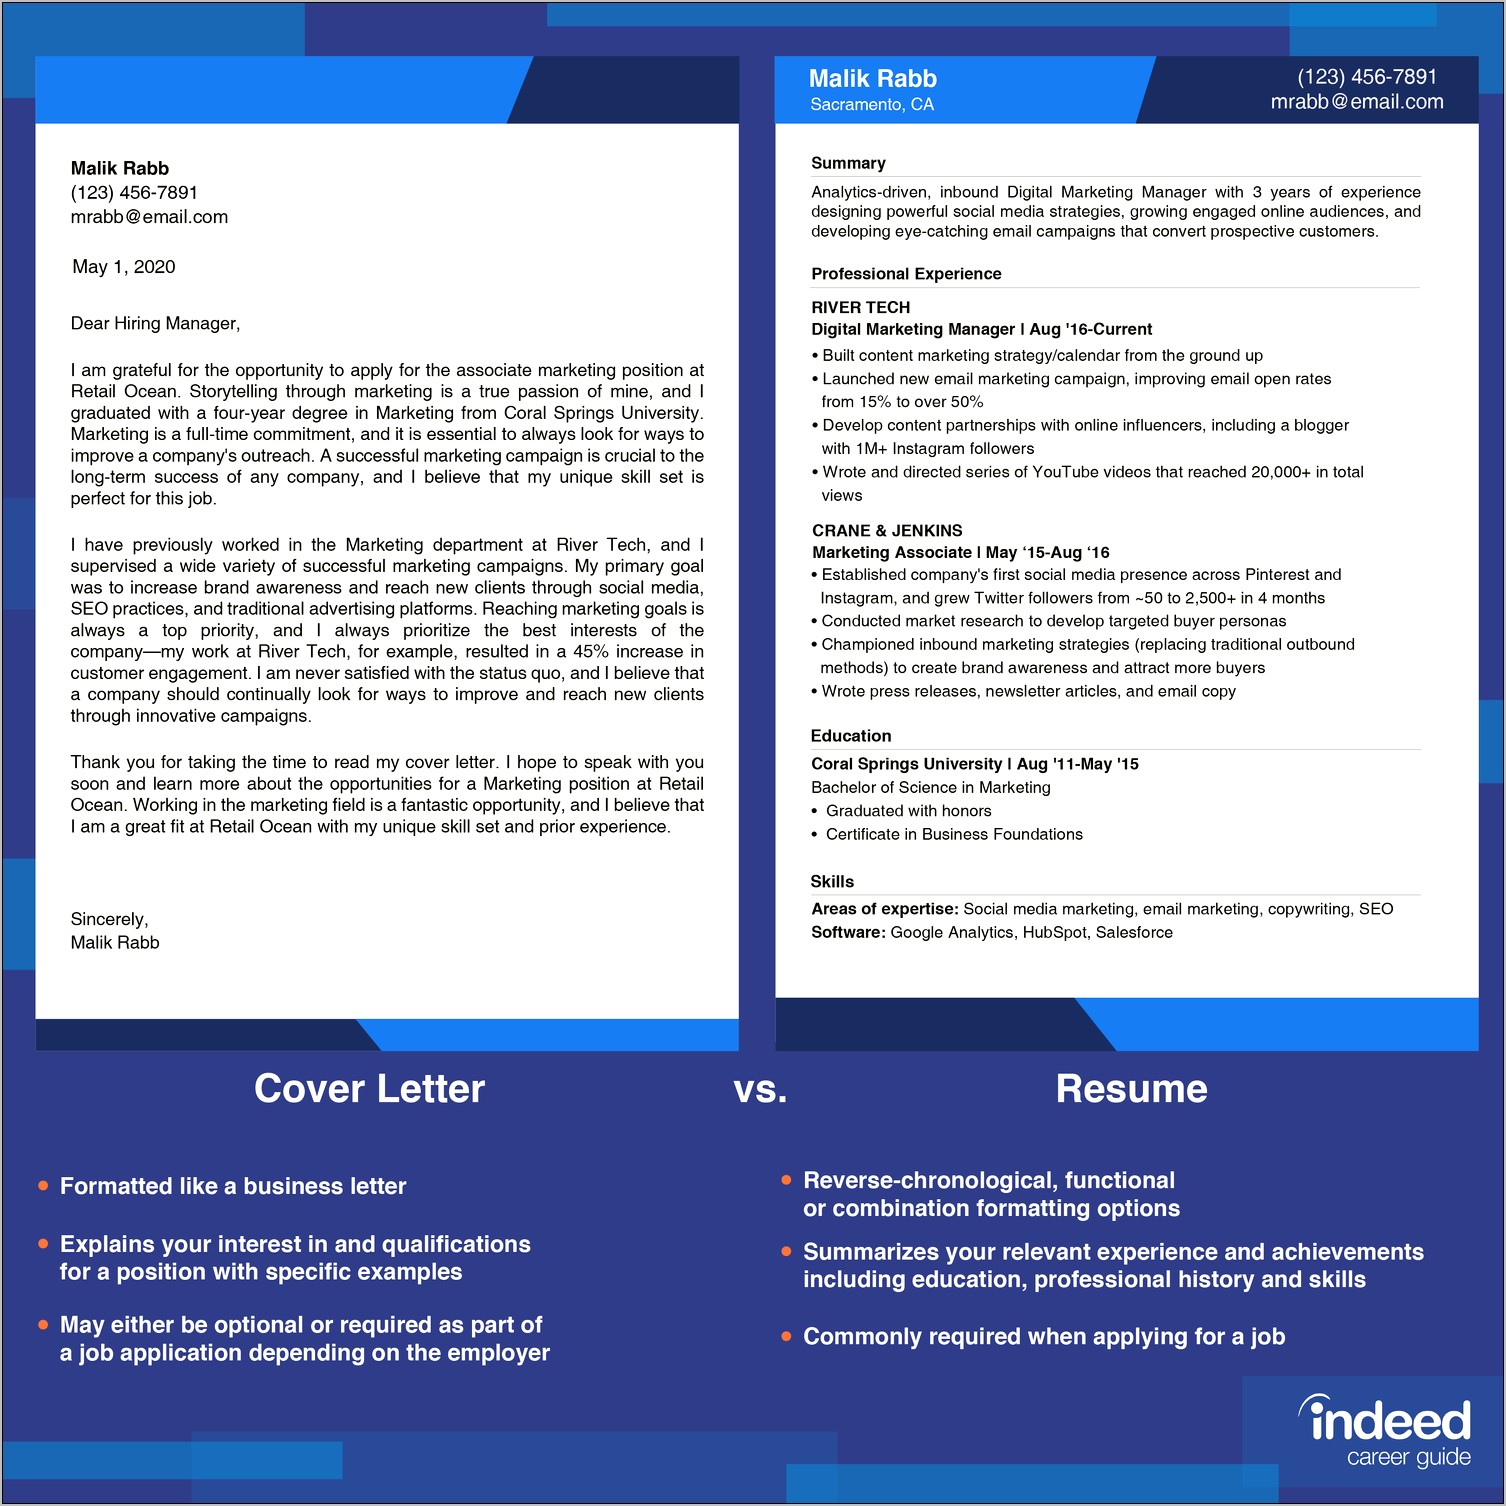 Standard Format For Resume Cover Letter